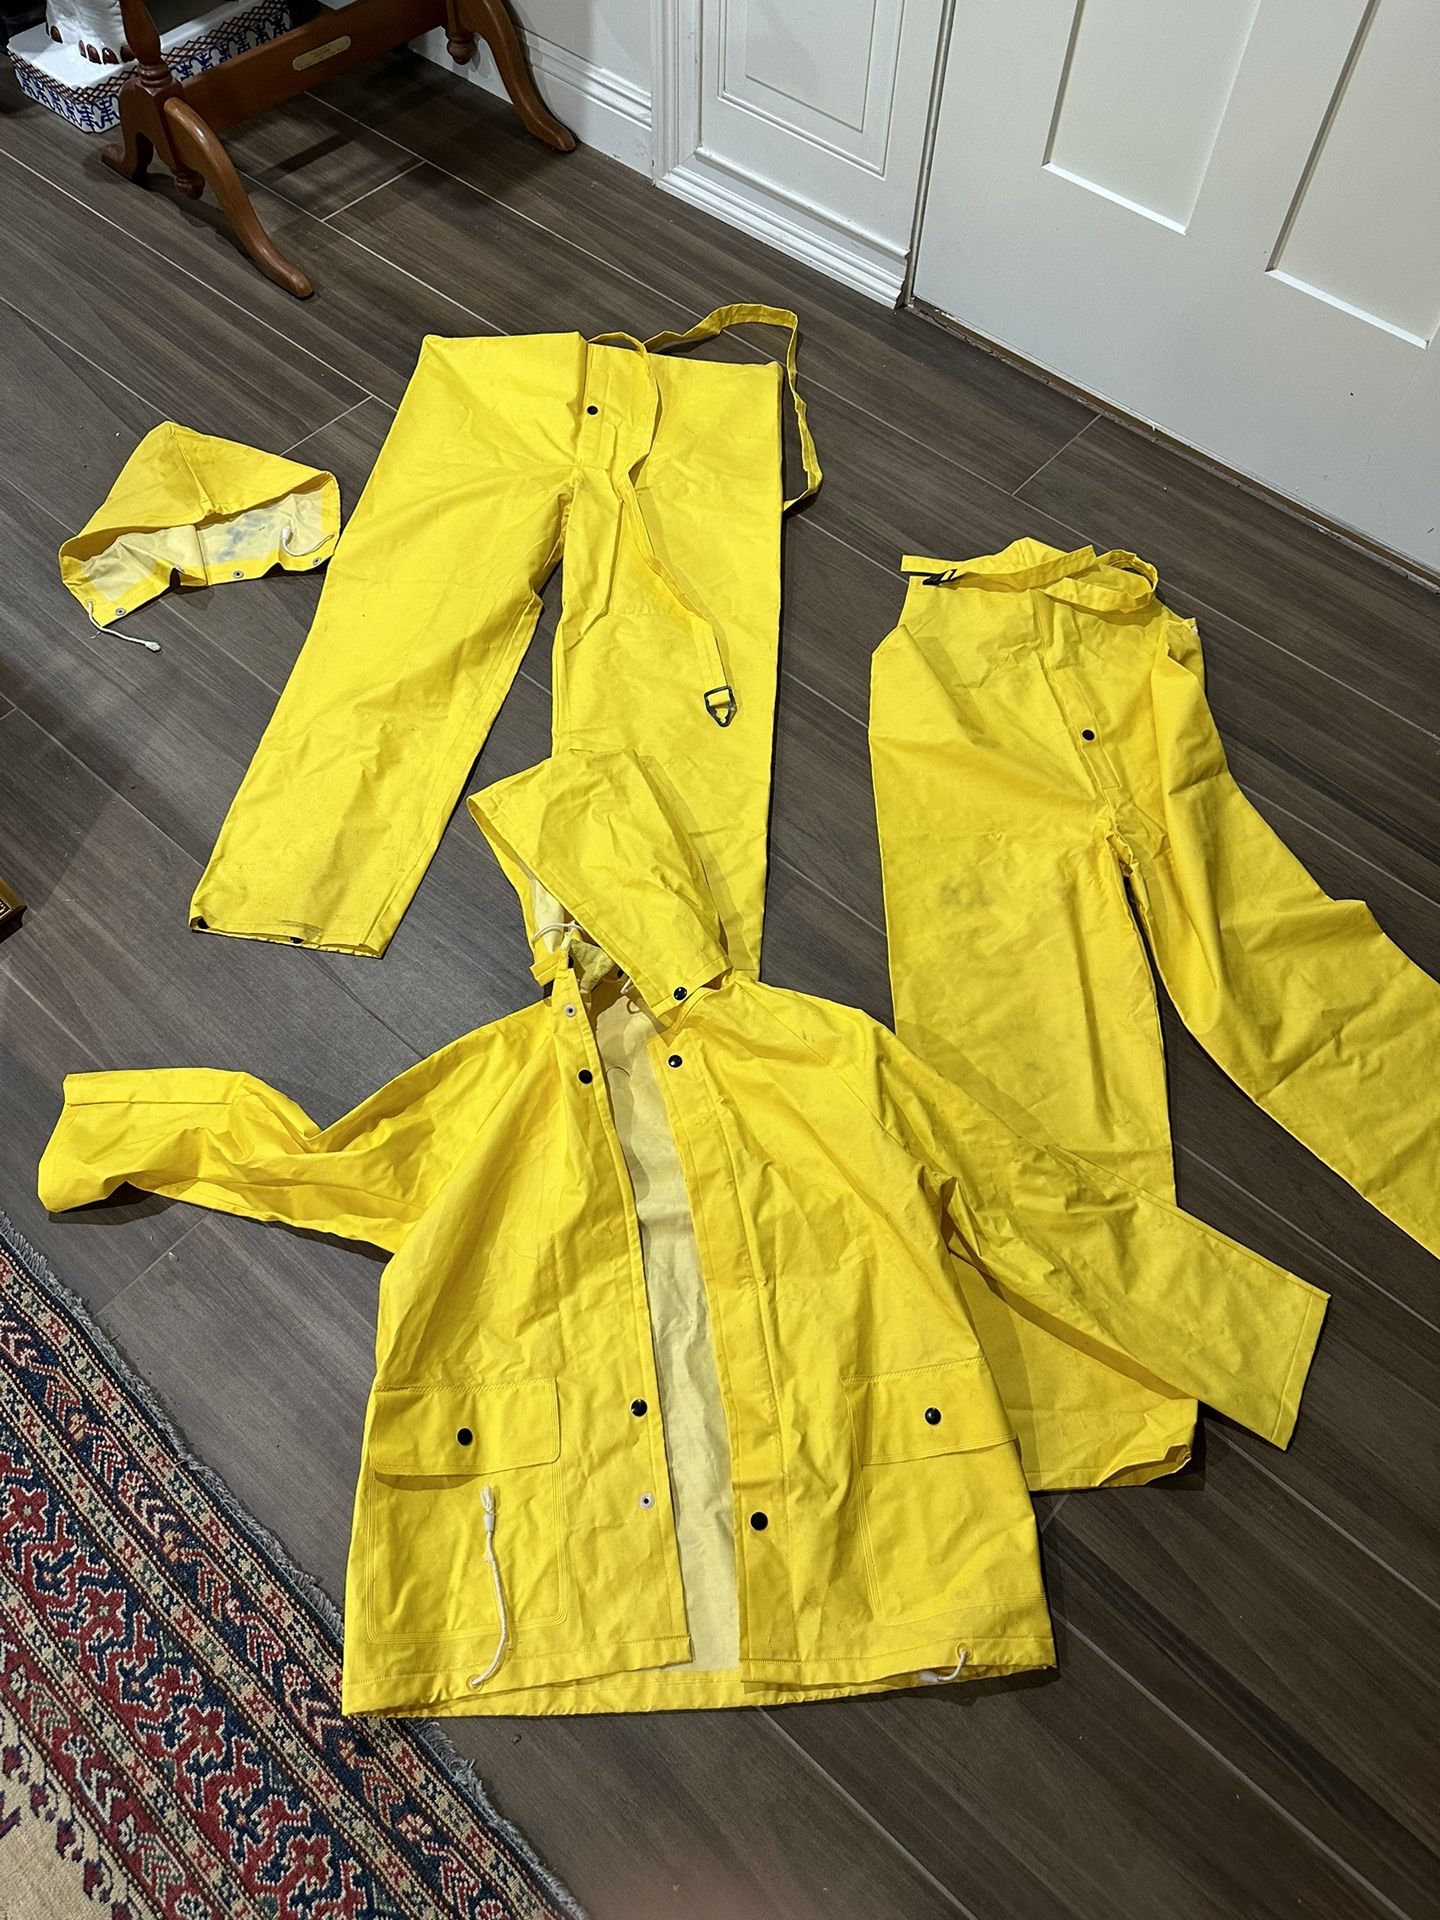 Yellow Raincoat Rain gear Costume Fisherman